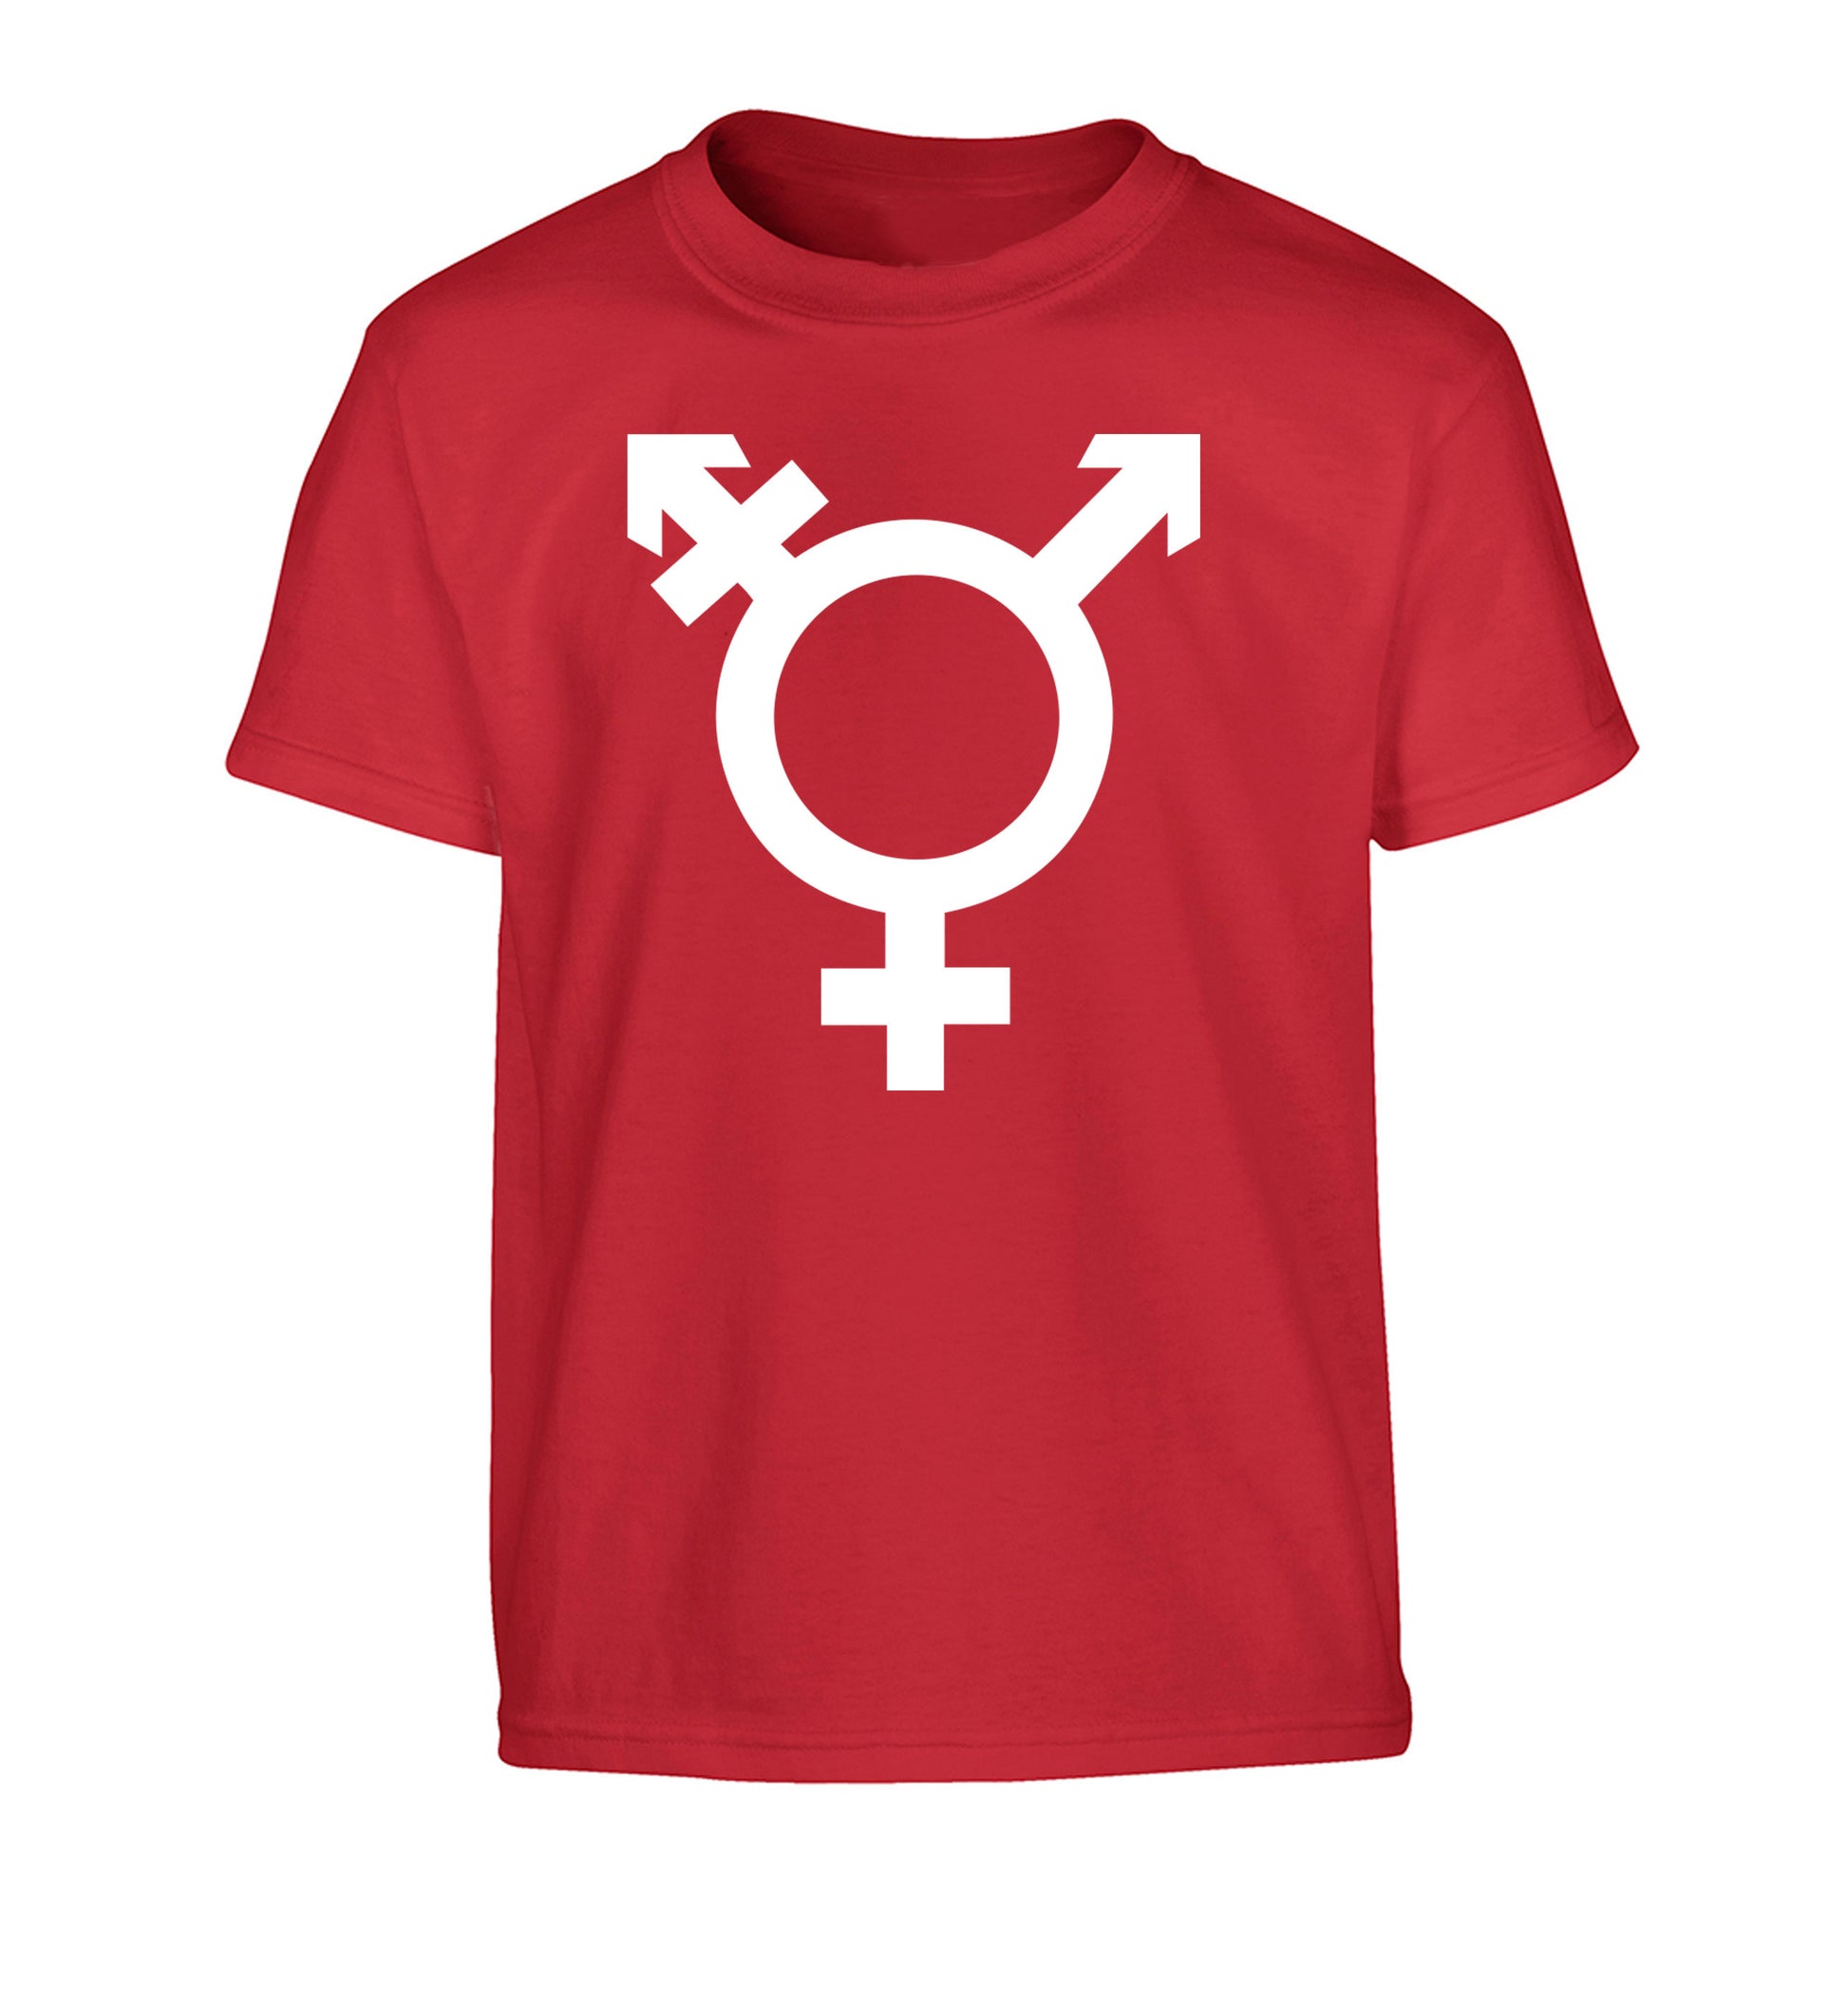 Gender neutral symbol large Children's red Tshirt 12-14 Years